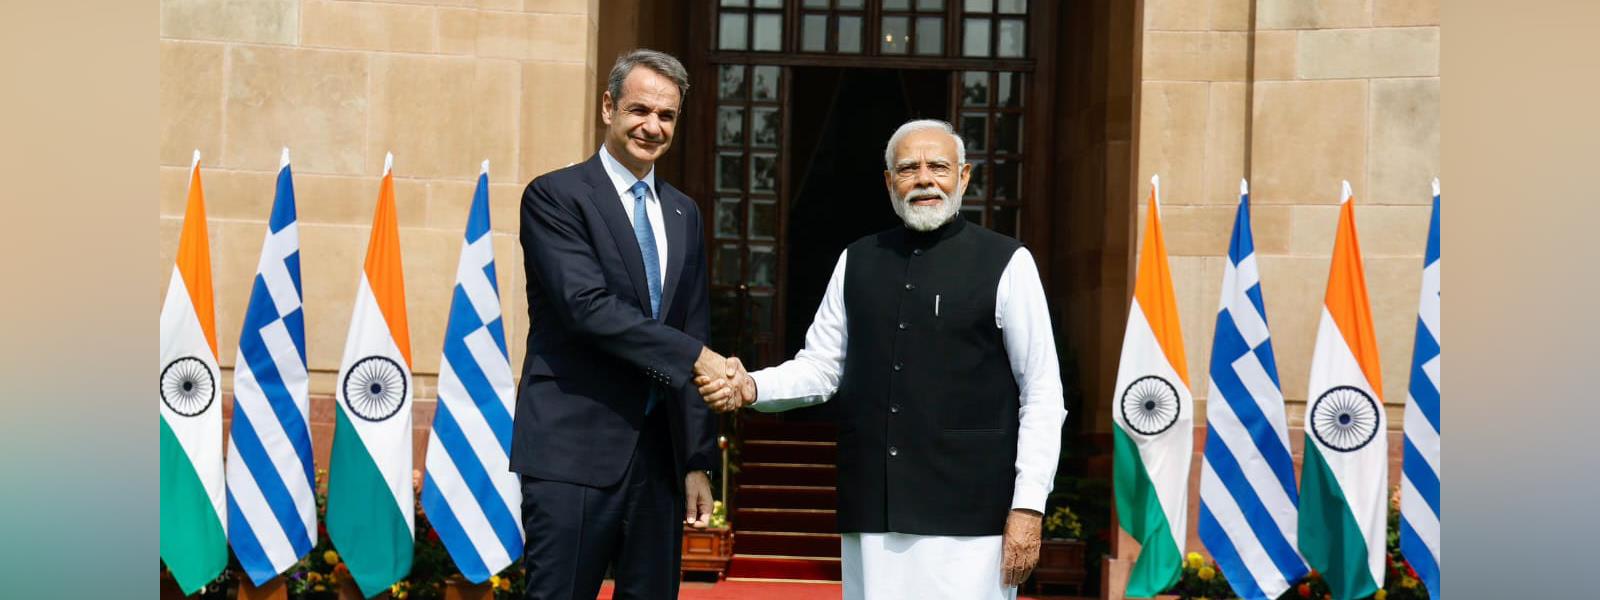 Prime Minister Shri Narendra Modi welcomed H.E. Mr. Kyriakos Mitsotakis, Prime Minister of Greece at Hyderabad House